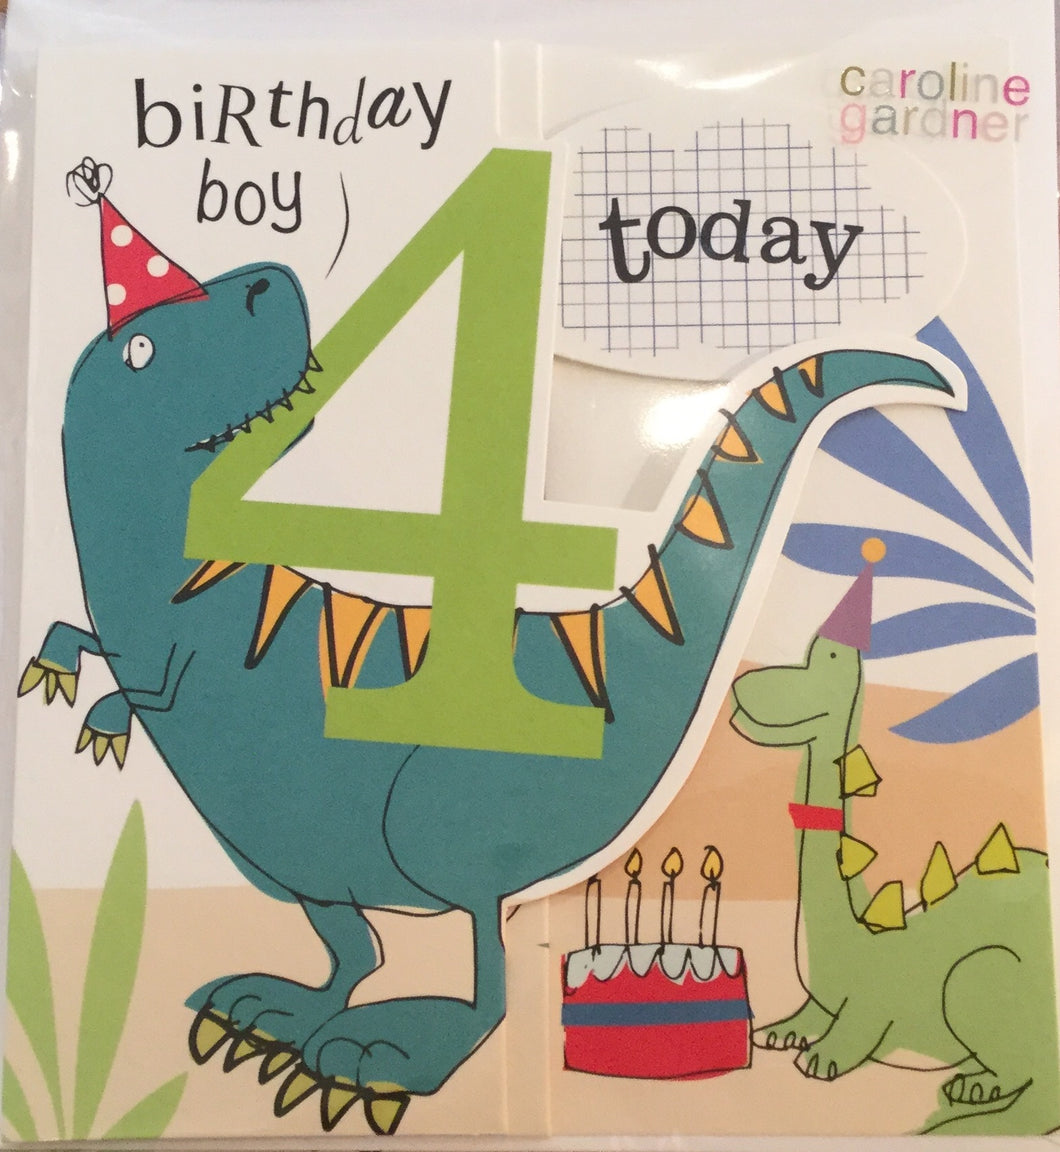 Happy birthday 4 today dinosaur